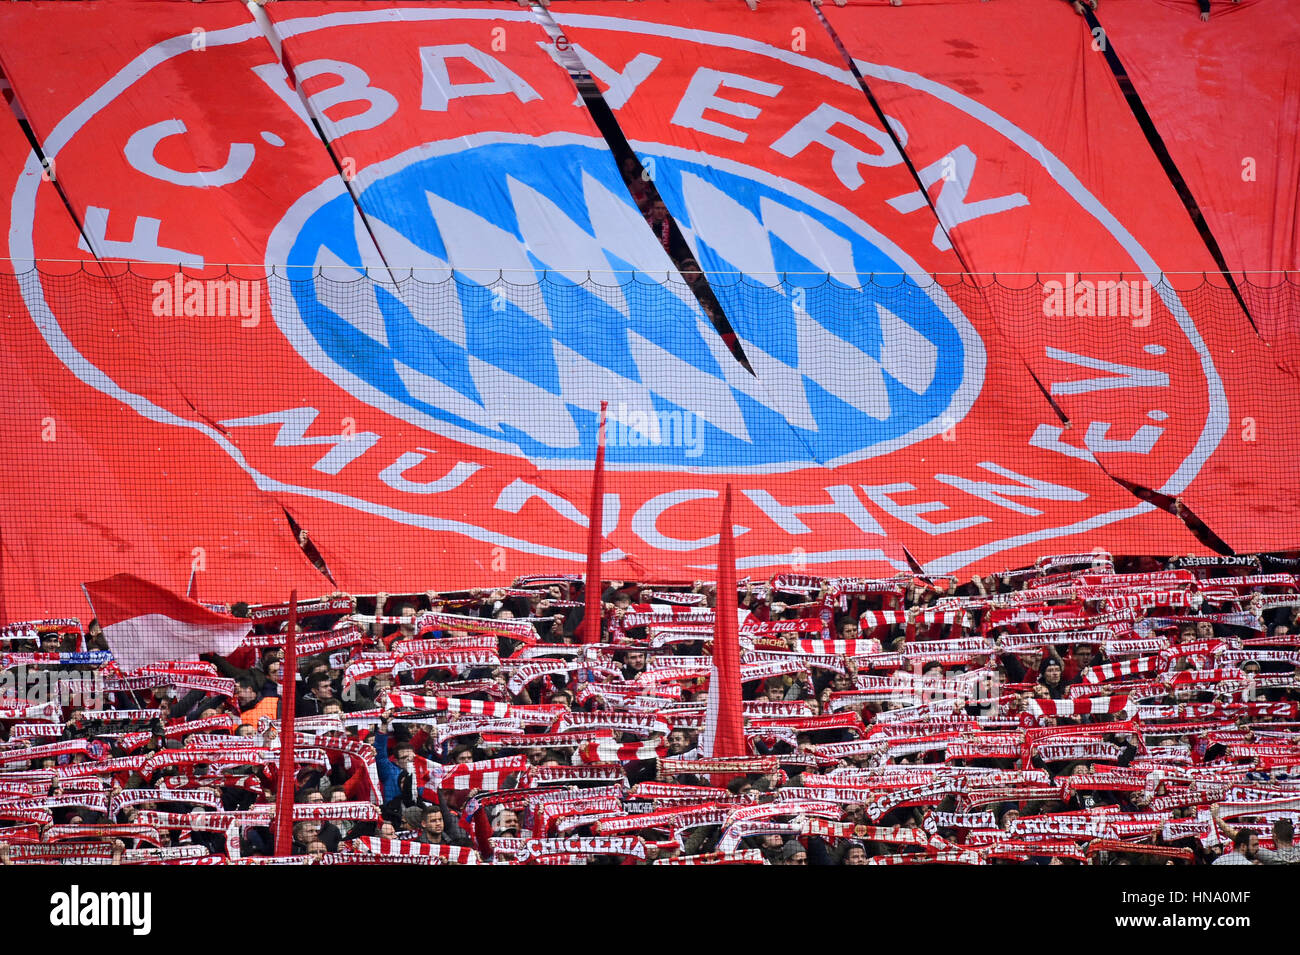 Soccer fans, fan block, atmospheric, Südkurve Allianz Arena, Munich, Bavaria, Germany Stock Photo